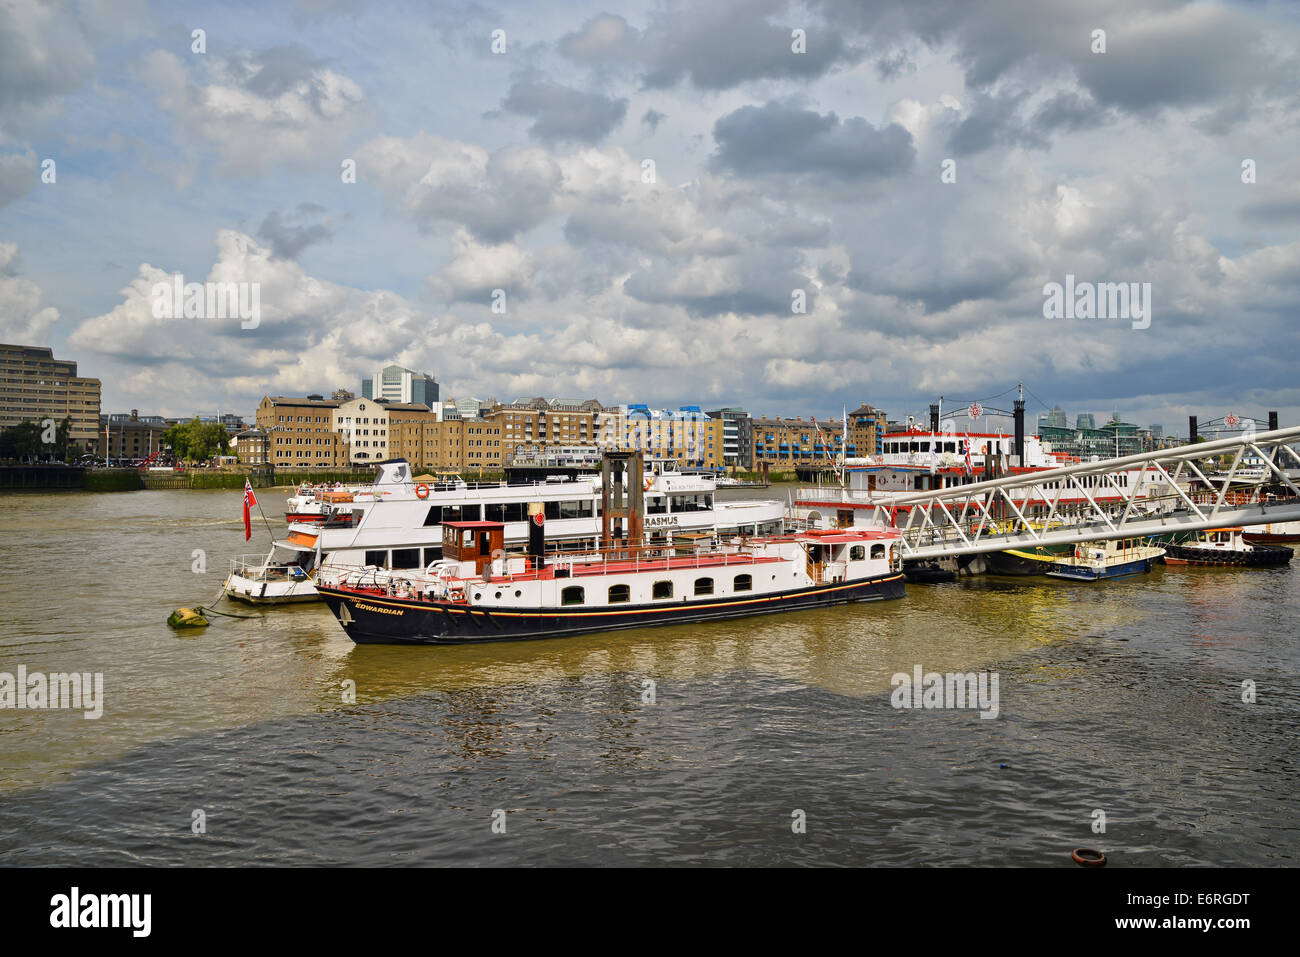 River Cruises on the River Thames London United Kingdom Stock Photo